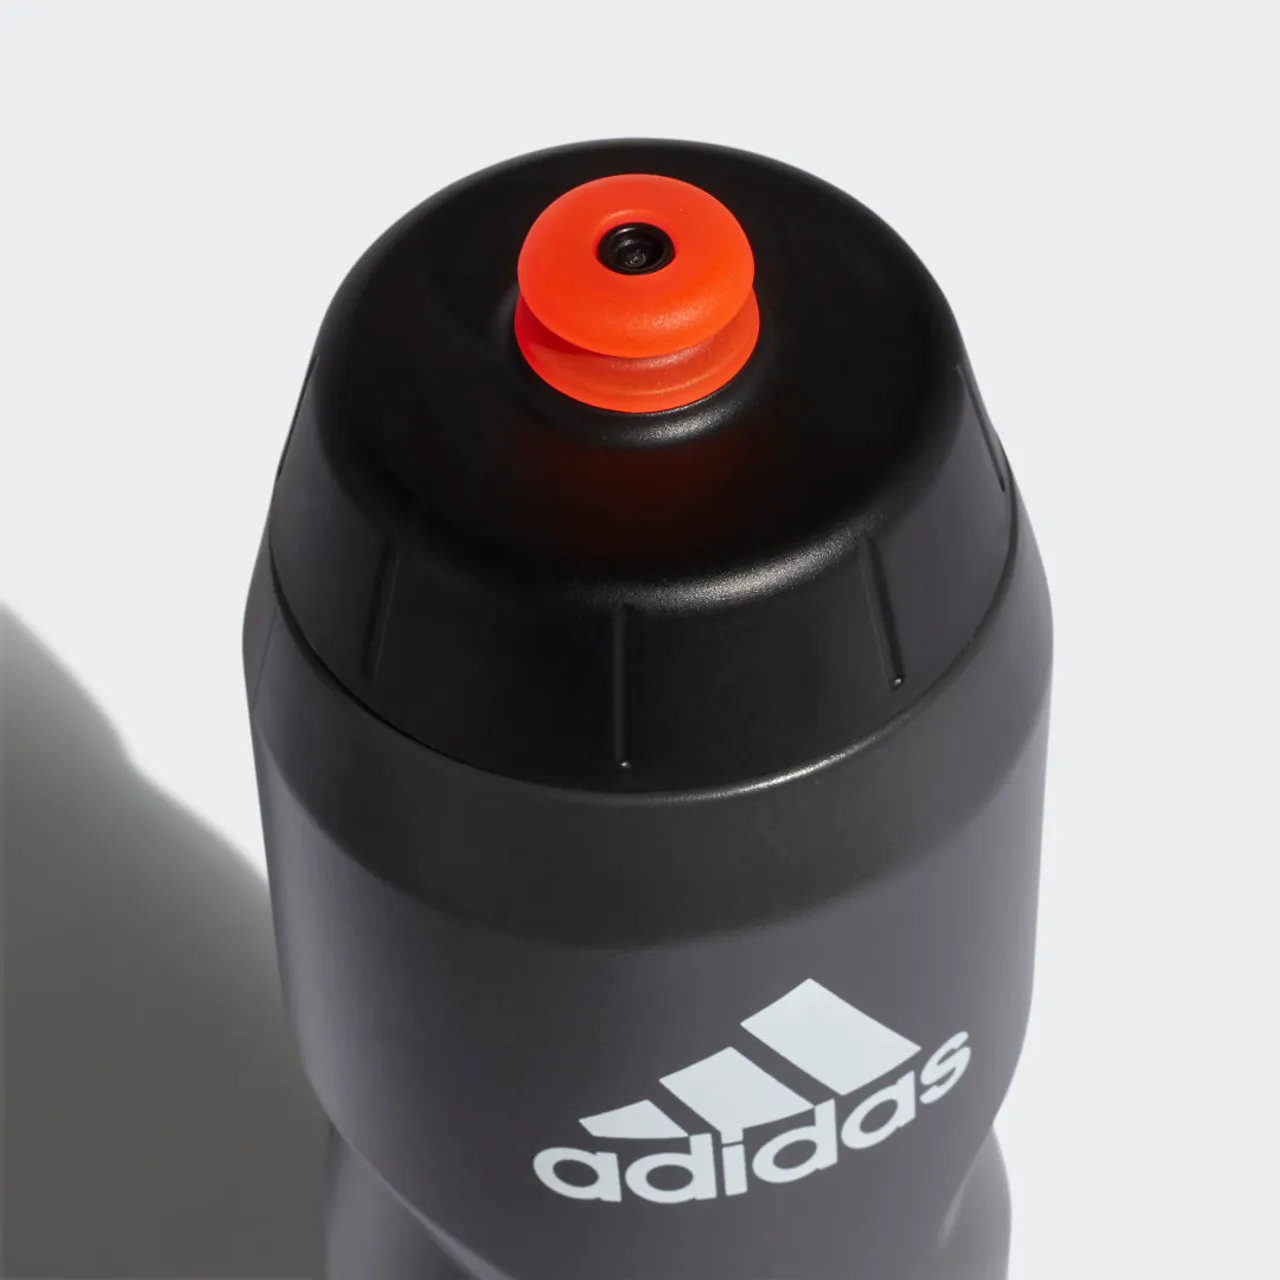 Performance Water Bottle 750 ML